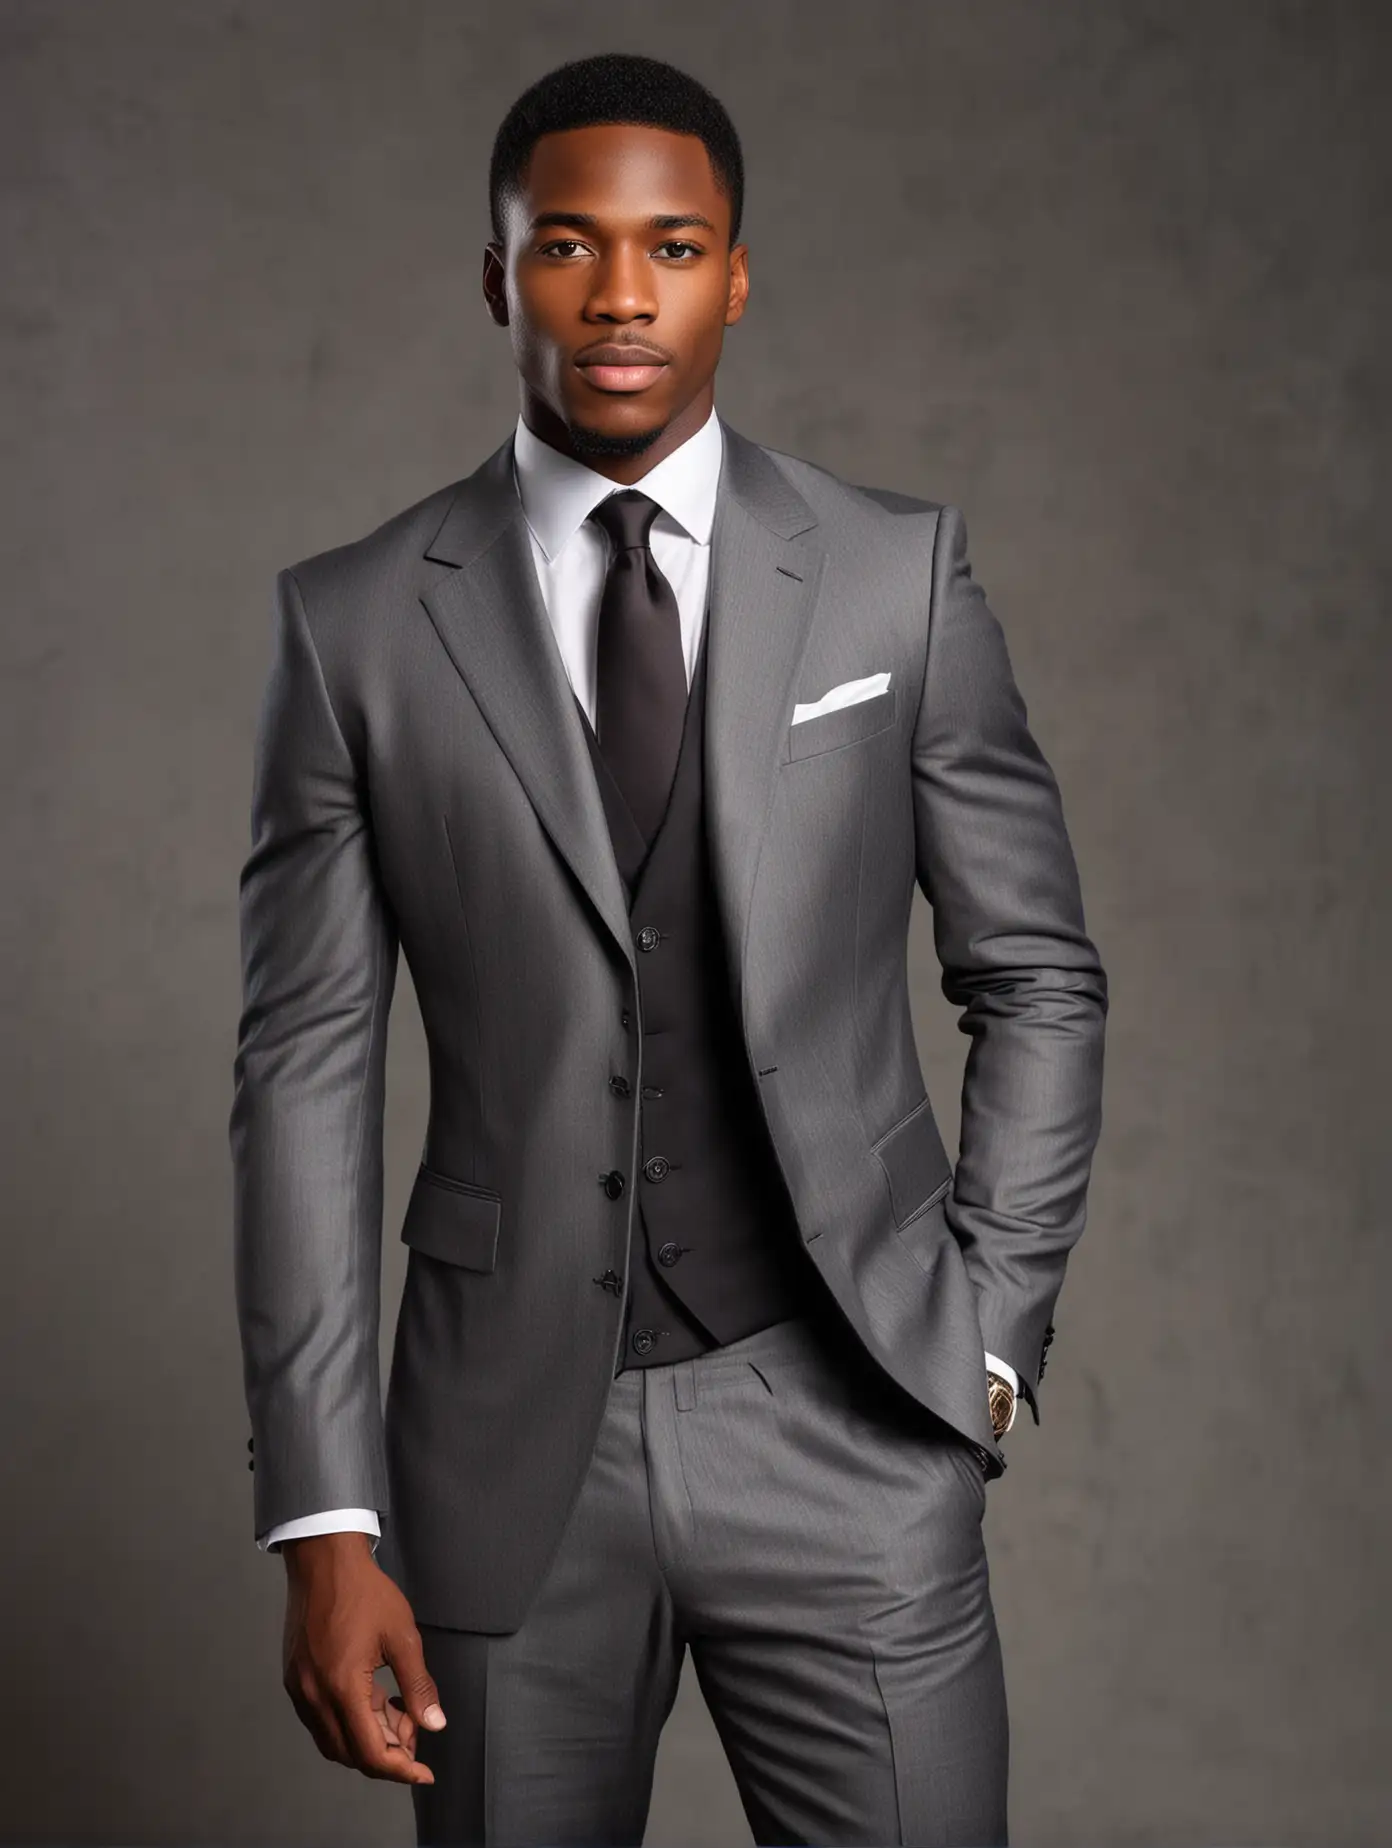 African American Businessman in HighEnd Suit Confident Professional Portrait